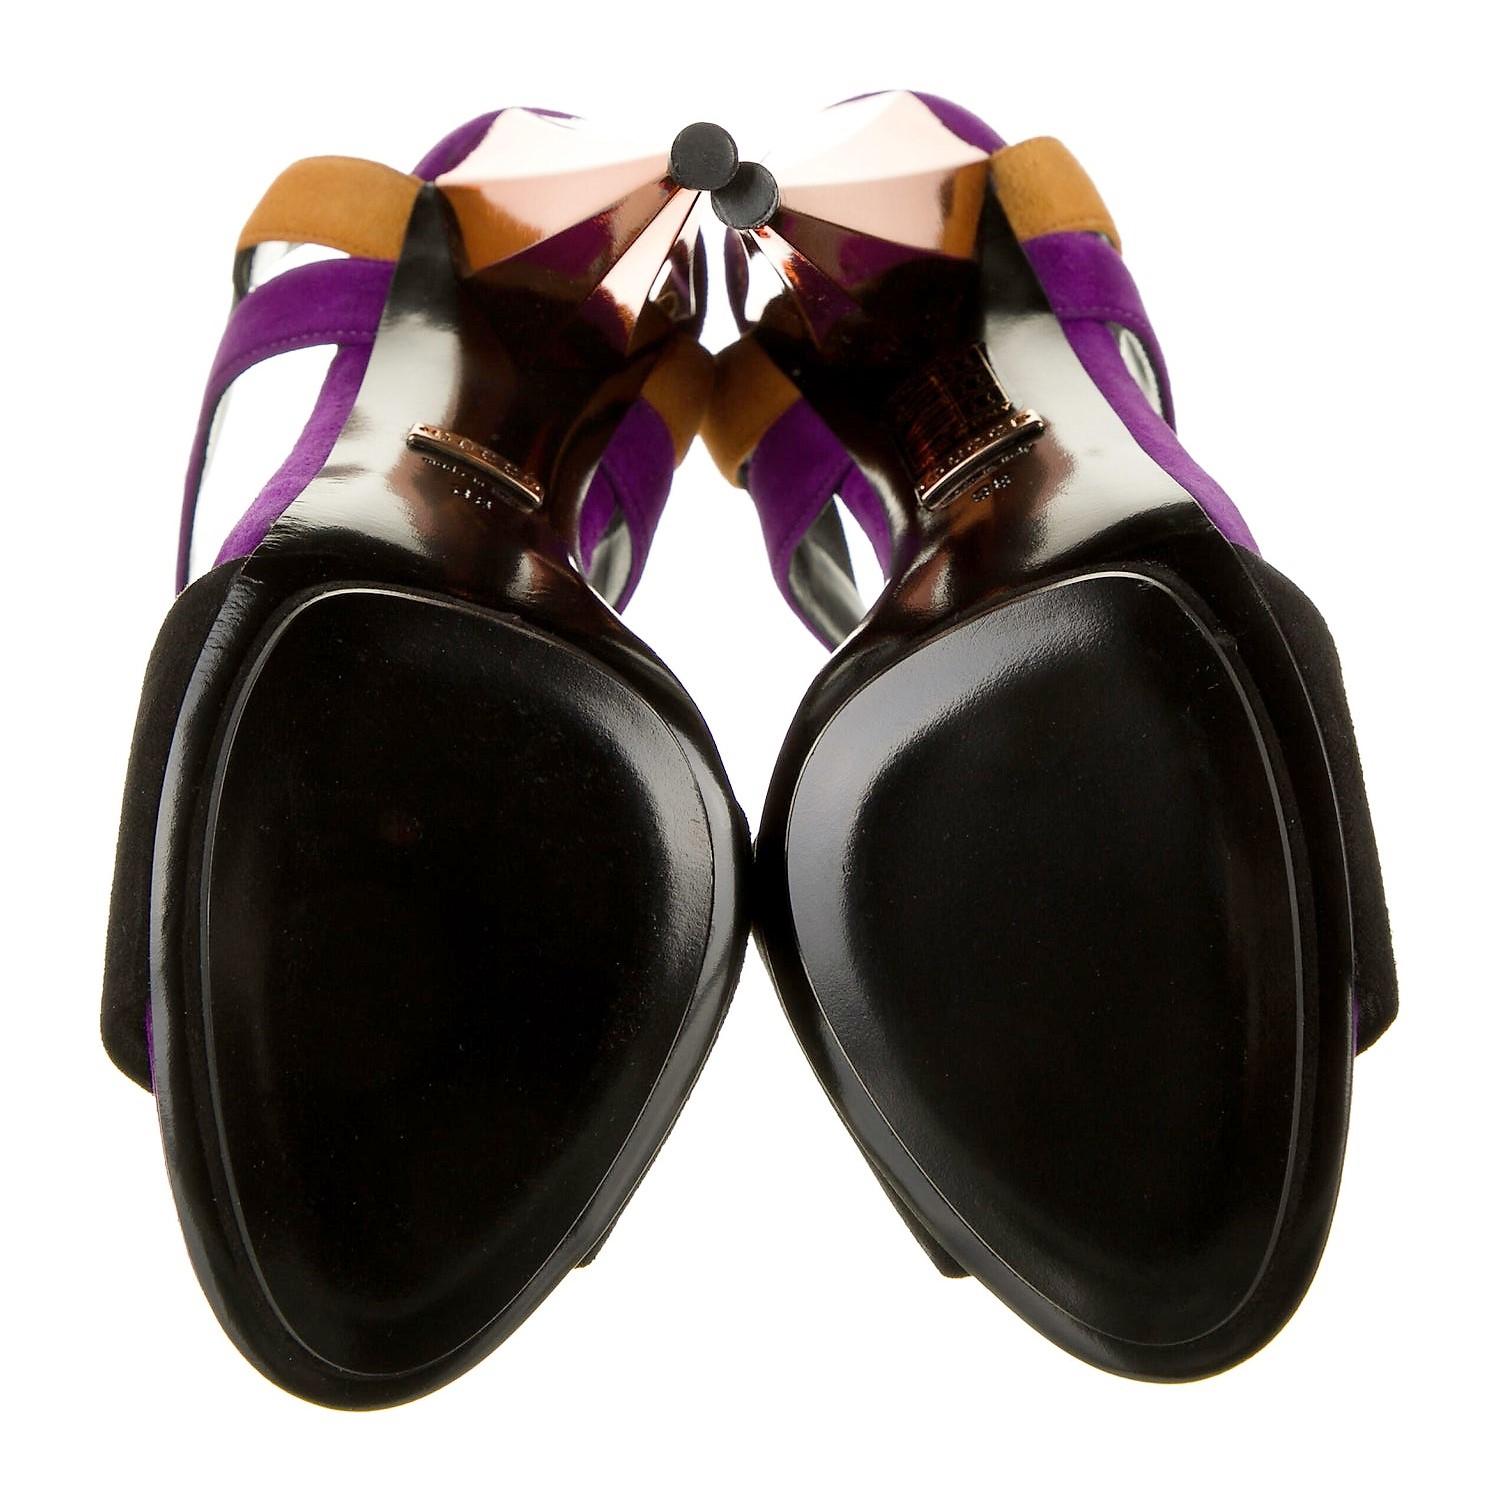 New Gucci Ad Runway 2014 Purple Orange Suede Mirrored Pump Heels Sz 39 For Sale 5